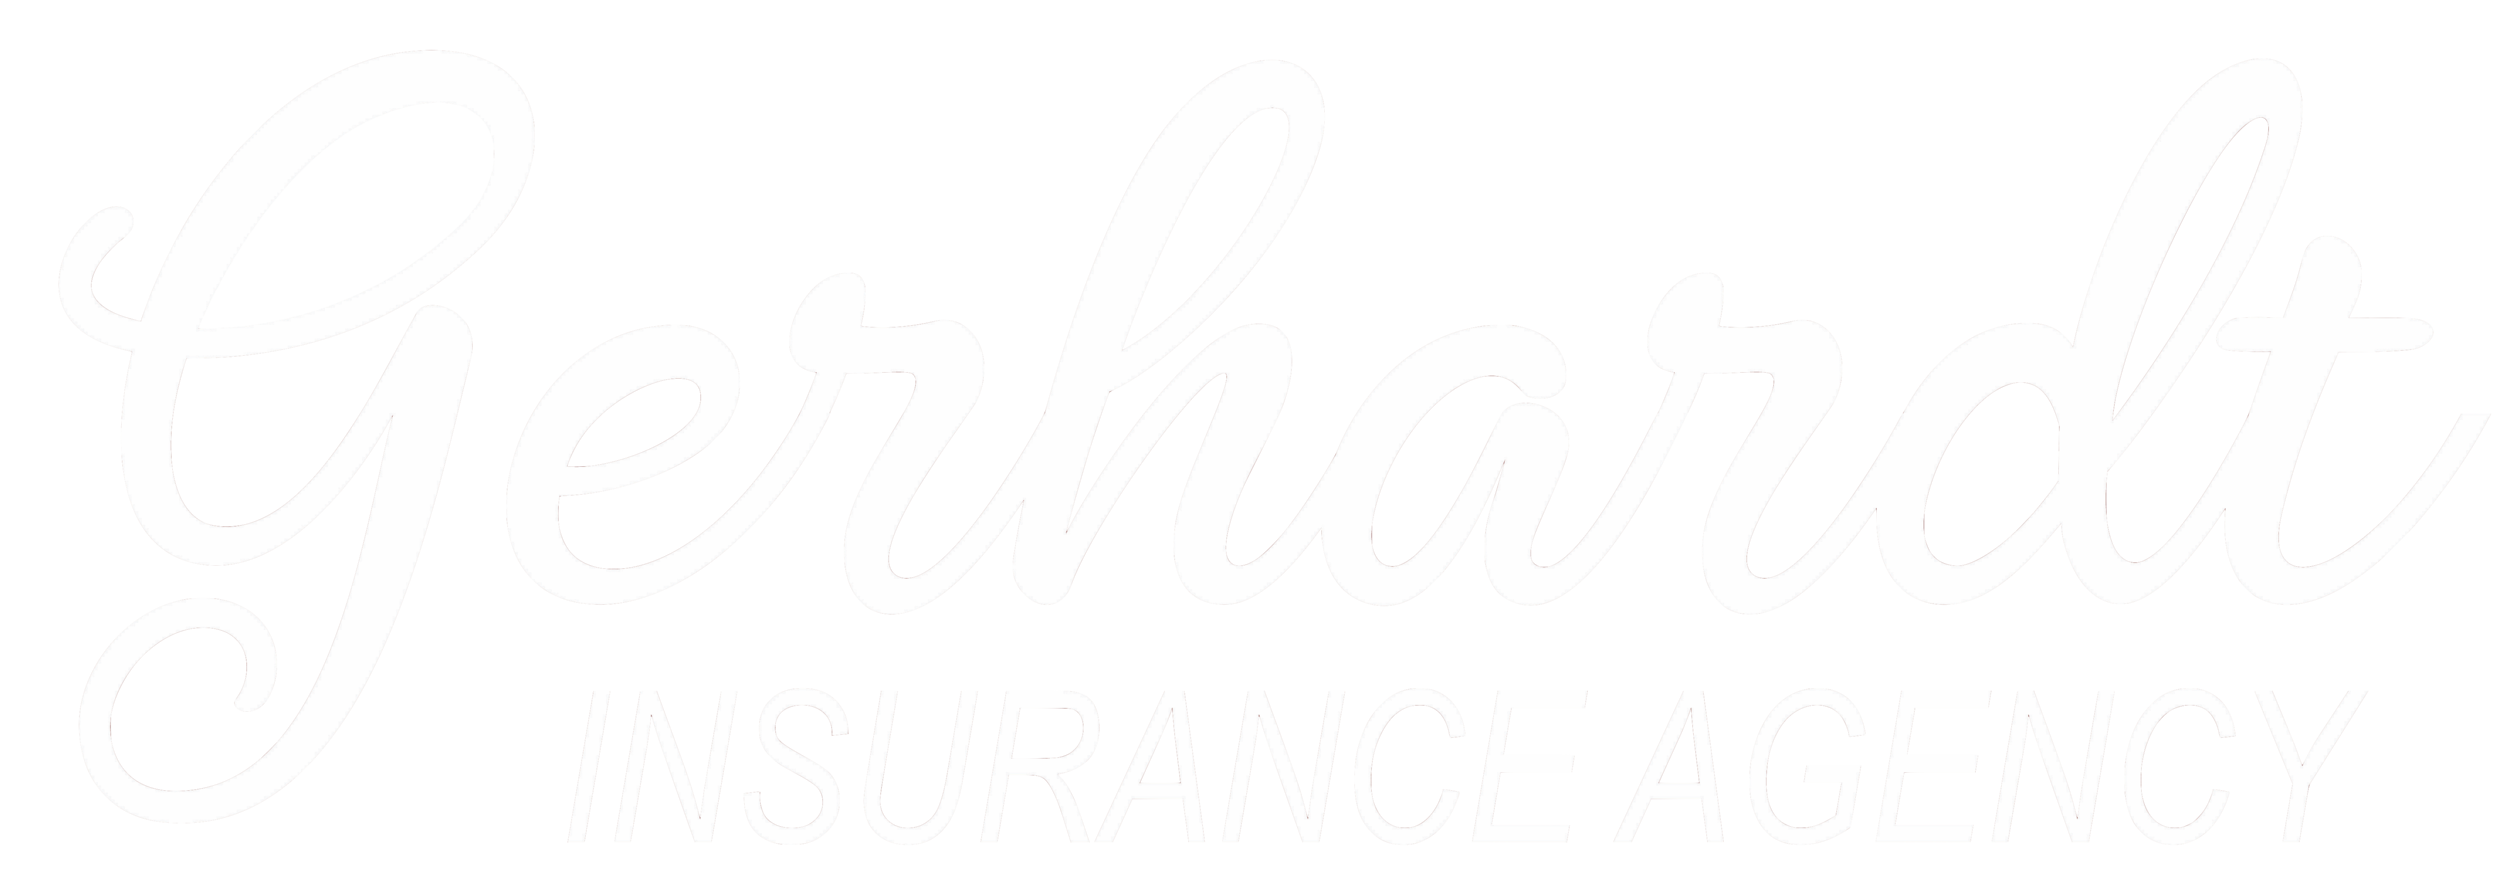 Gerhardt Insurance